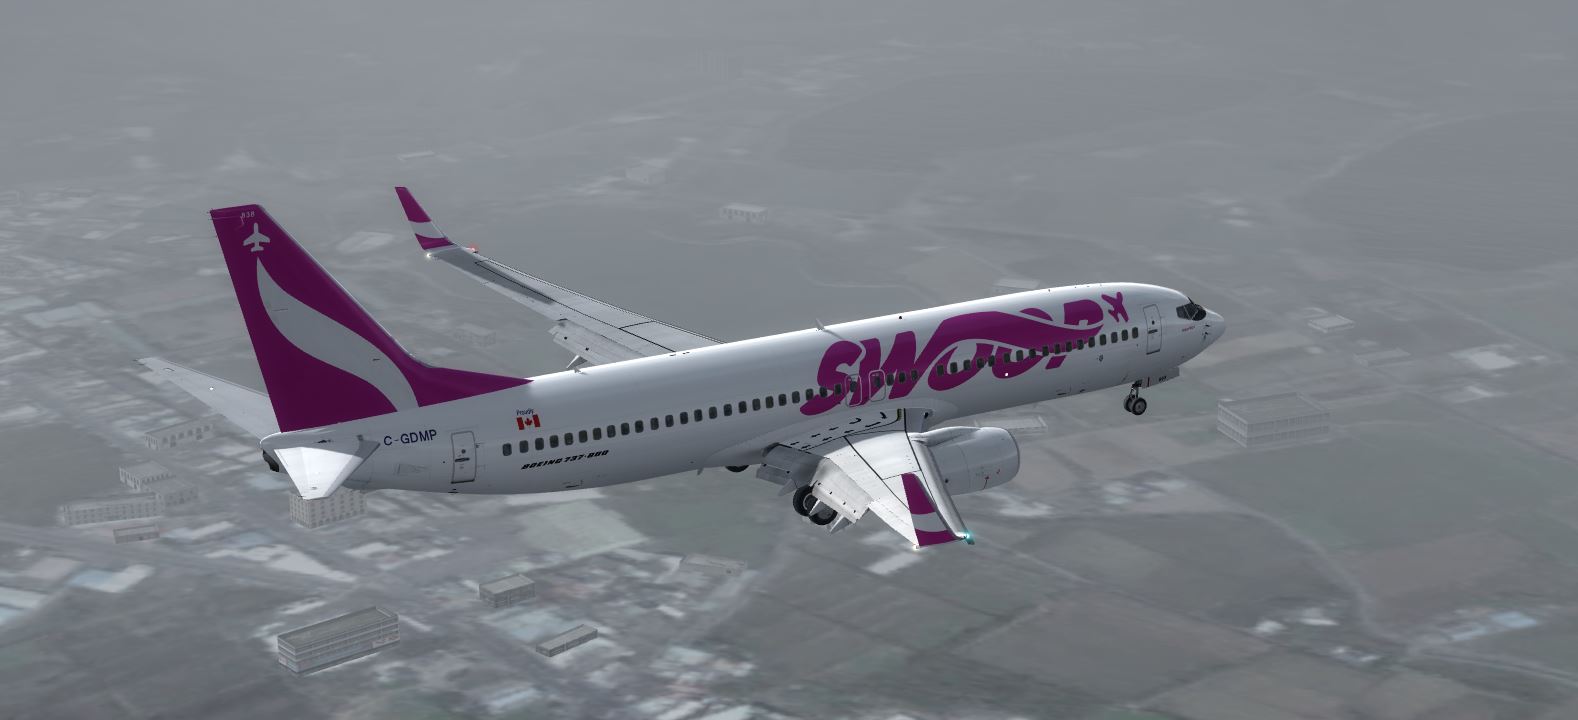 B737-800 Swoop Airlines-2170 